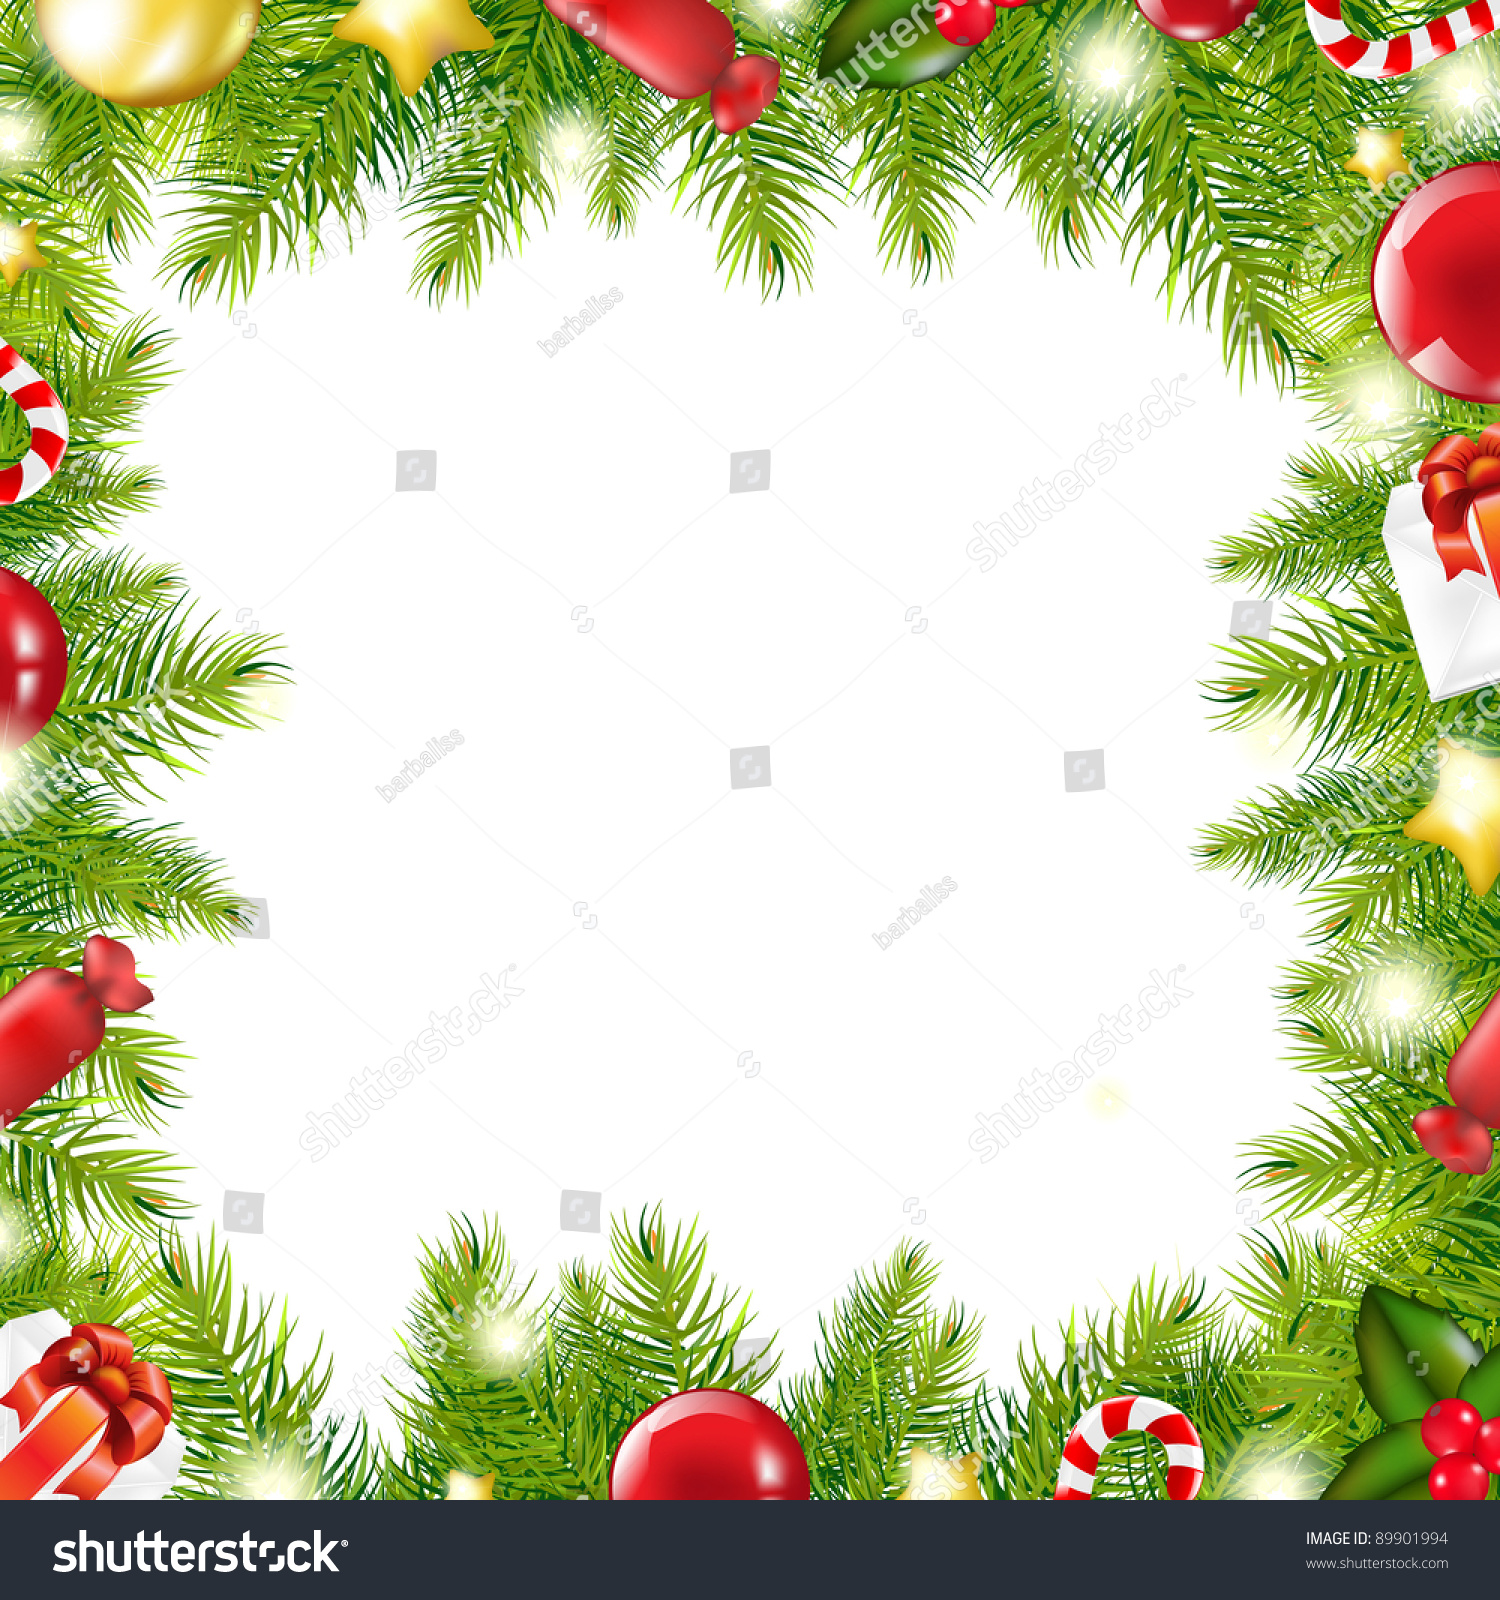 Christmas Tree Border Stock Photo 89901994 : Shutterstock